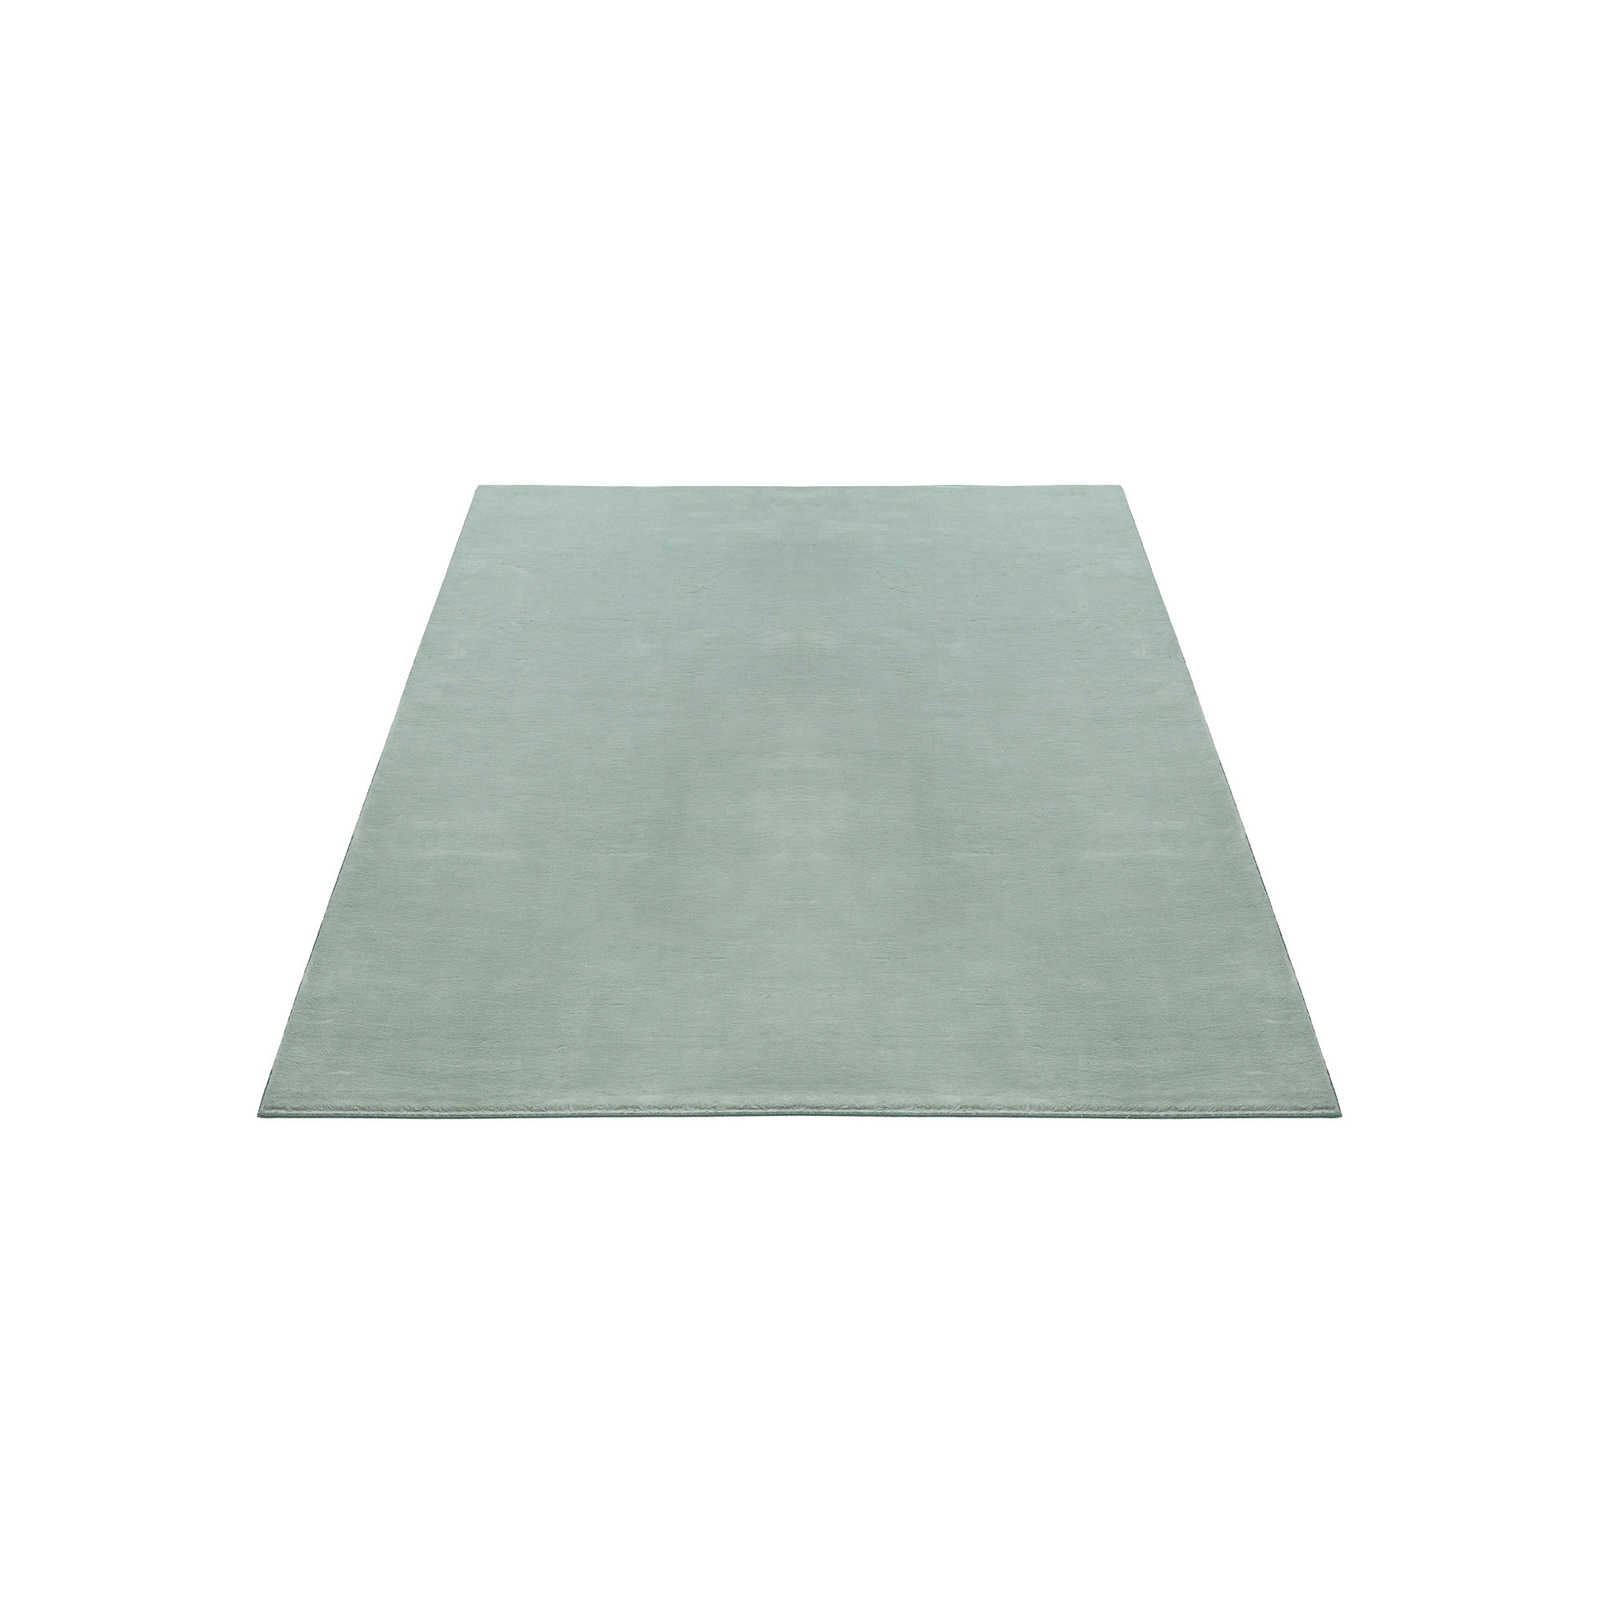 Soft high pile carpet in soft green - 200 x 140 cm
